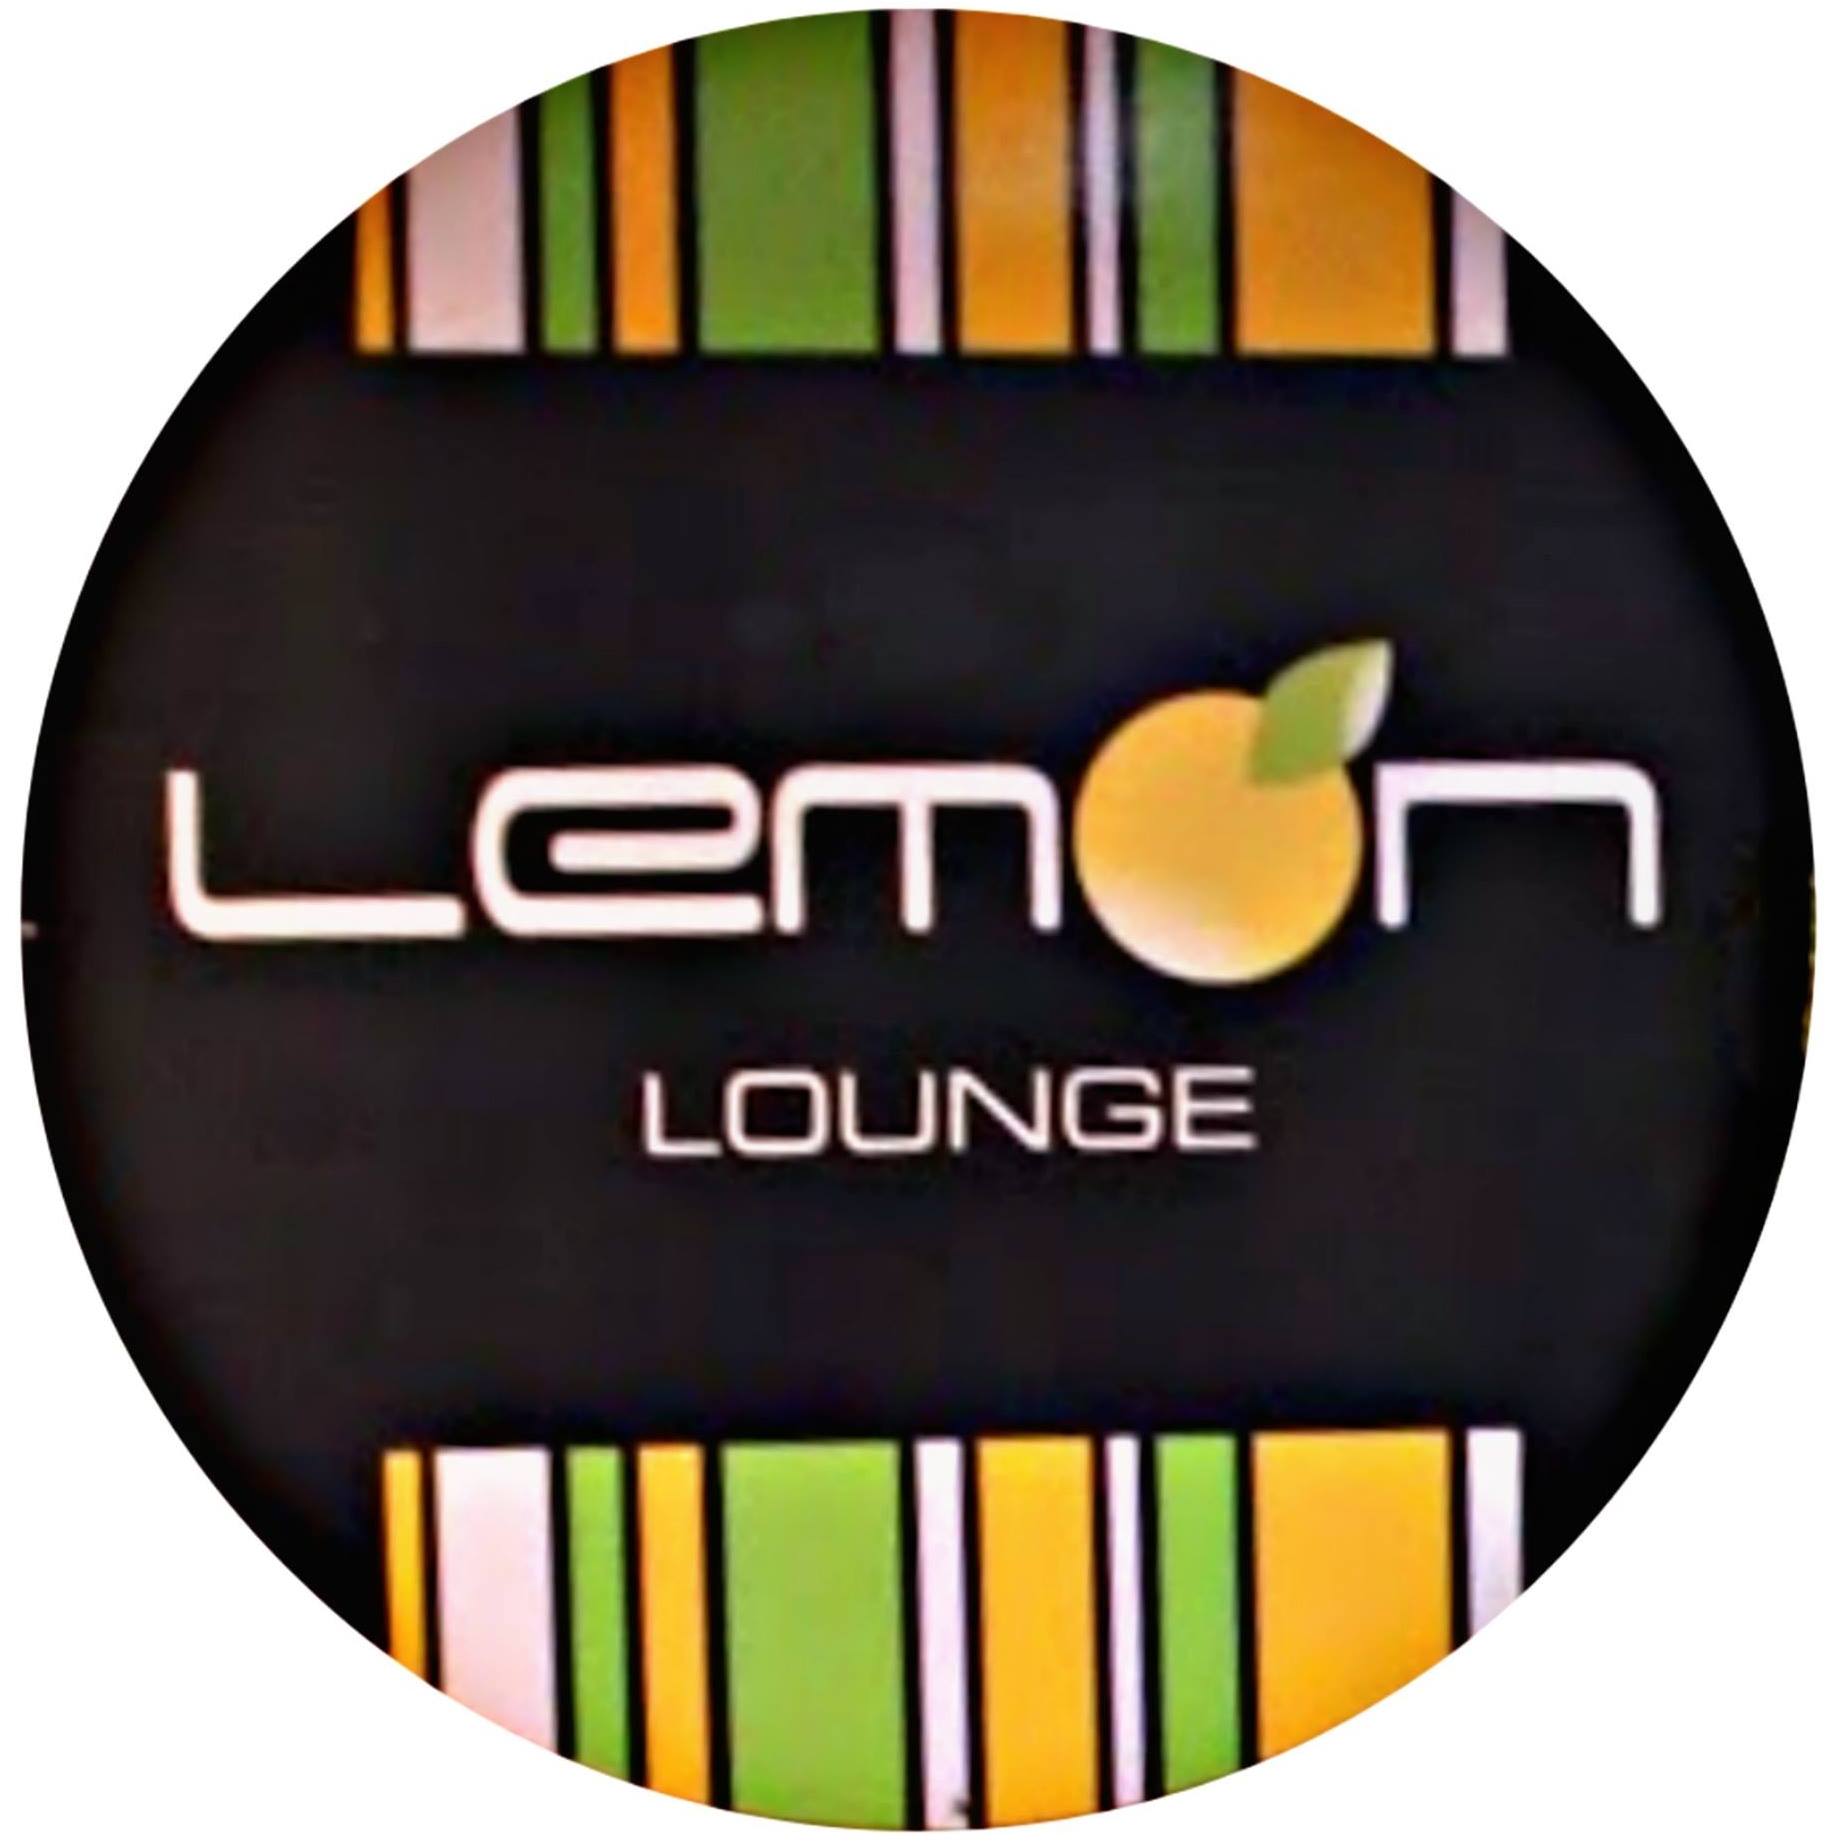 Lemon Lounge|Salon|Active Life